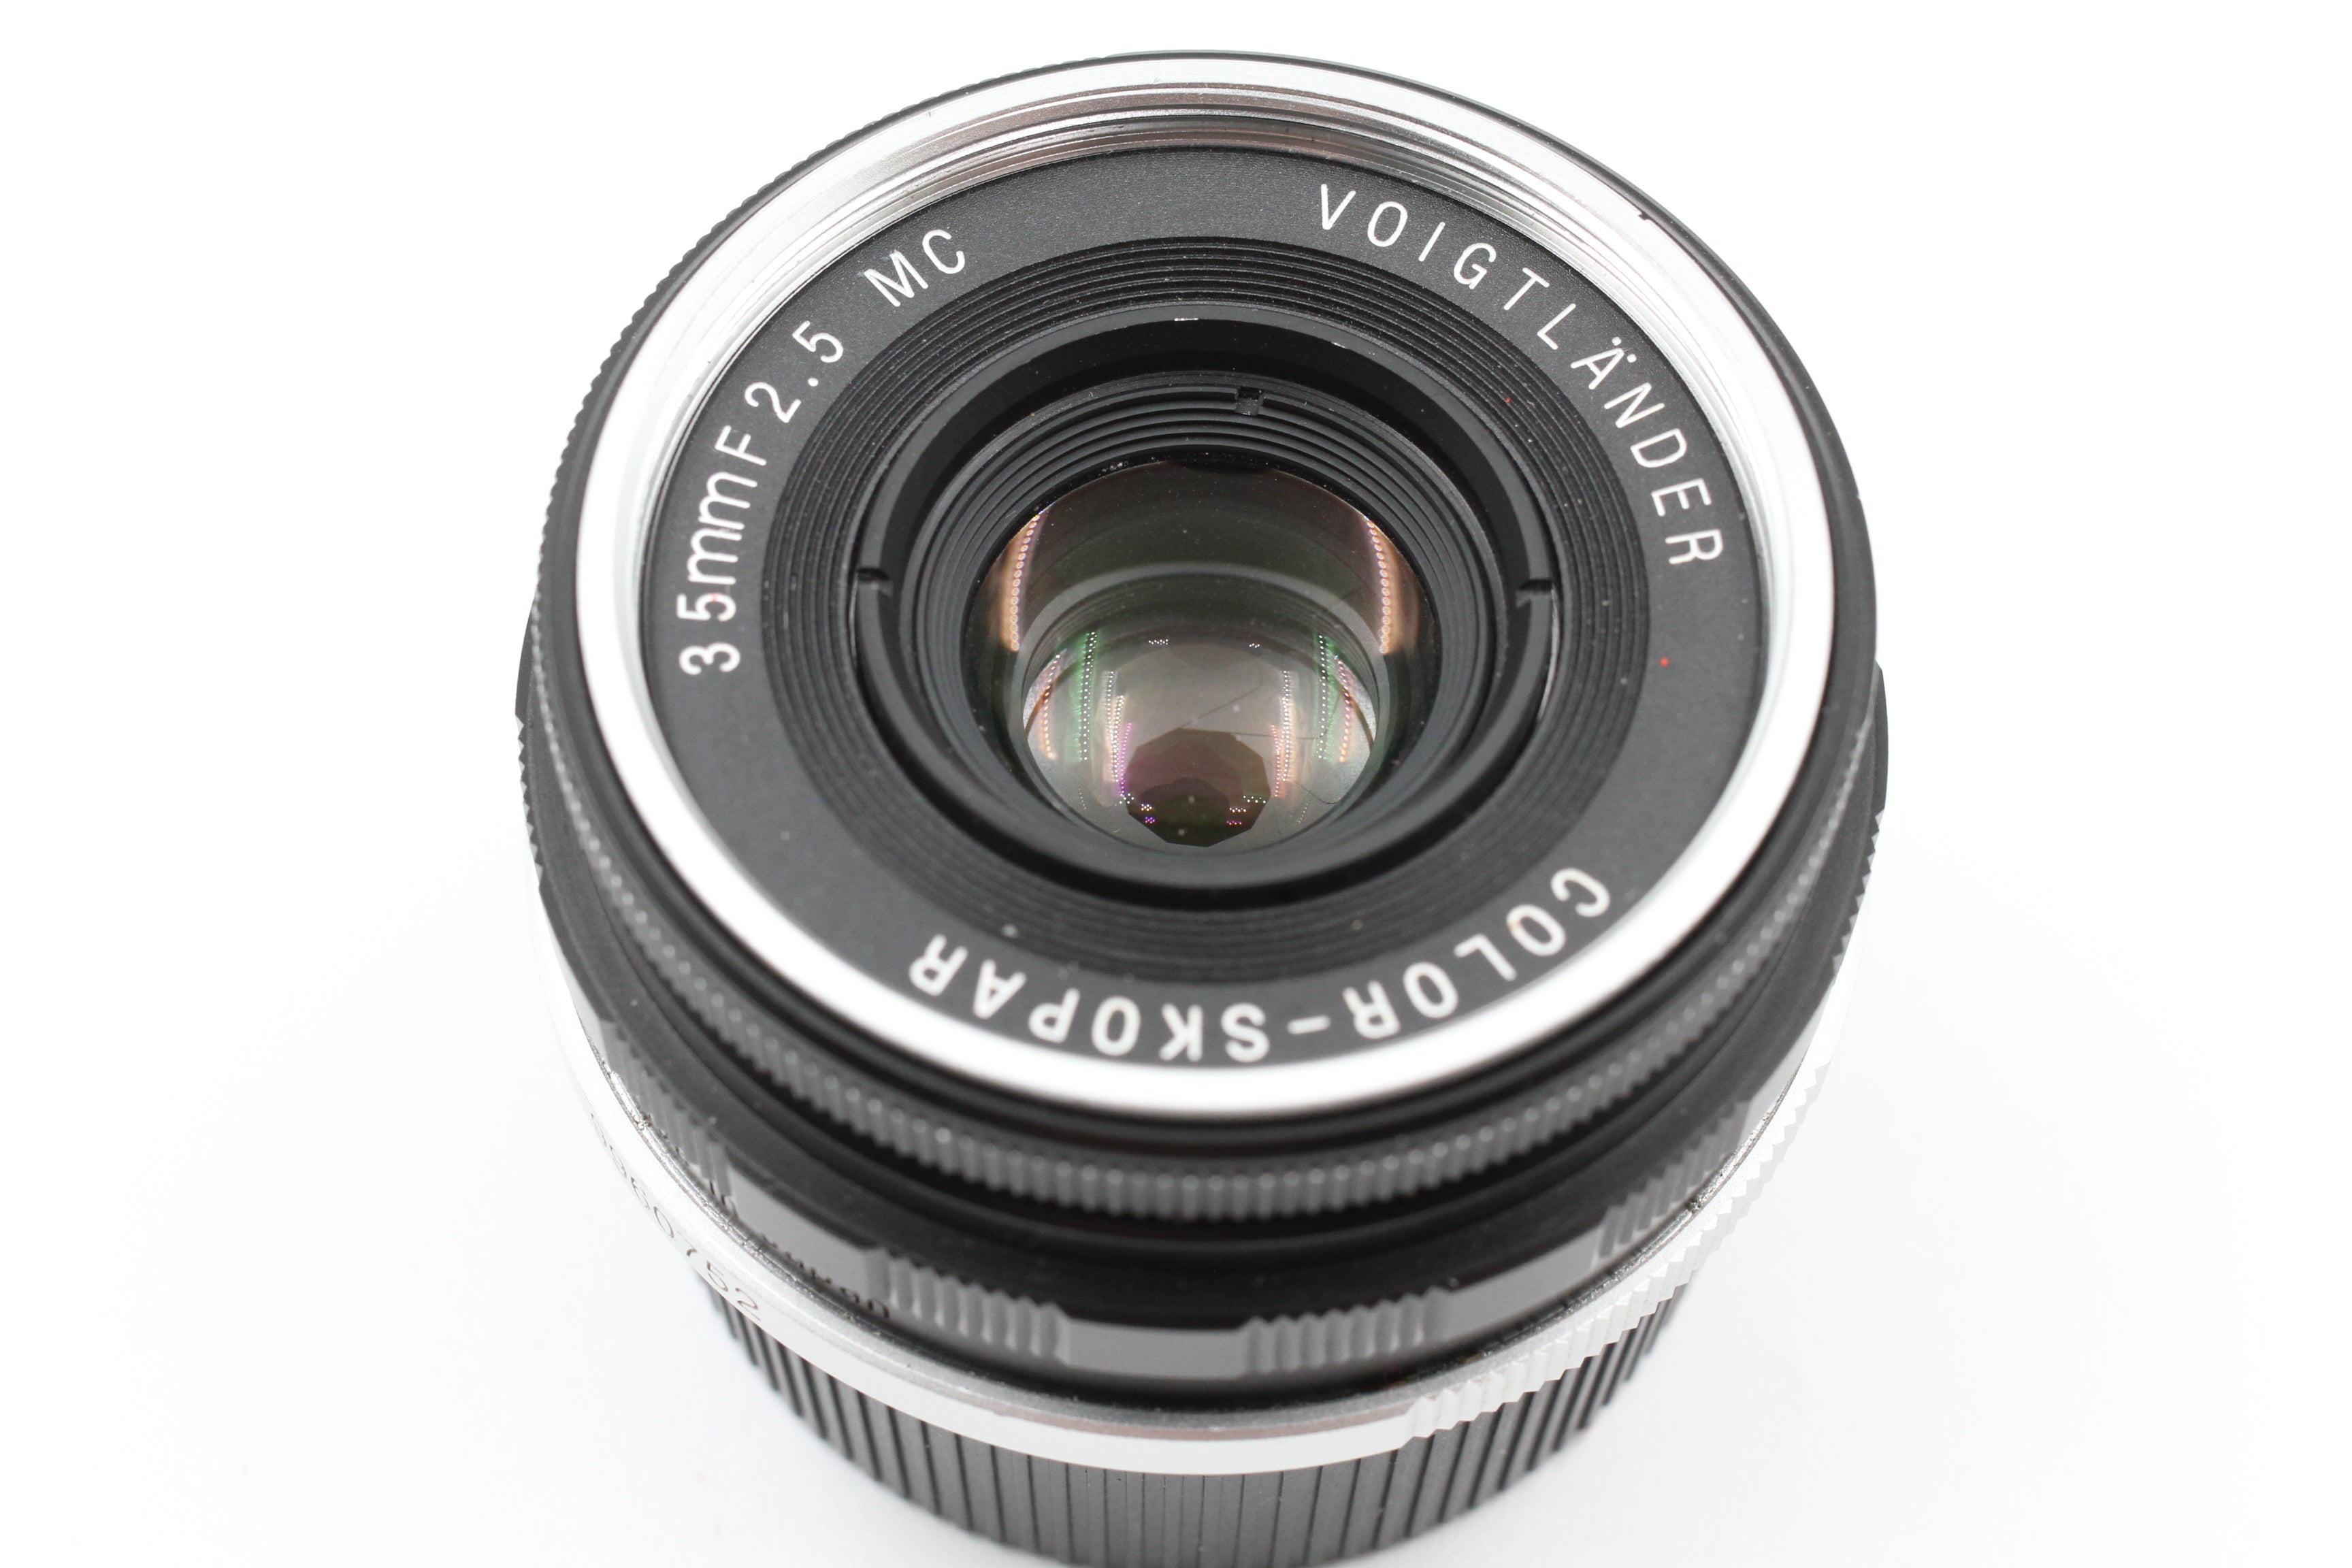 Voigtlander 35mm f2.5 Skopar Typ II Ltm Lens w/ Caps & Voigtlander Adapter